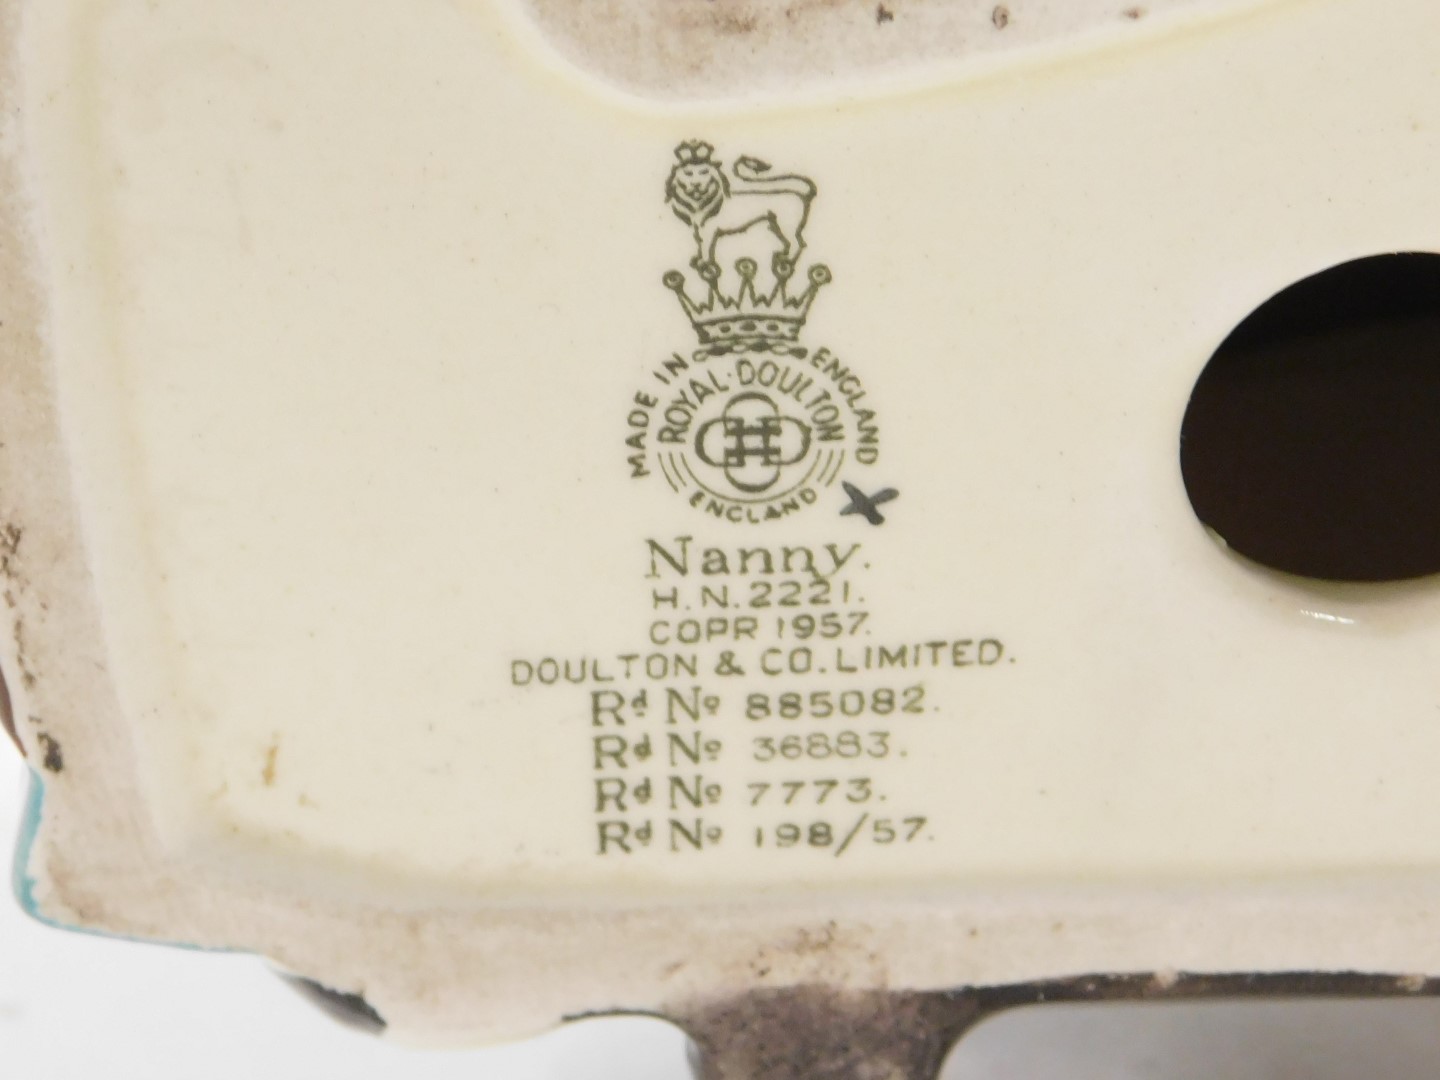 A Royal Doulton porcelain figurine Nanny, HN2221. - Image 2 of 2